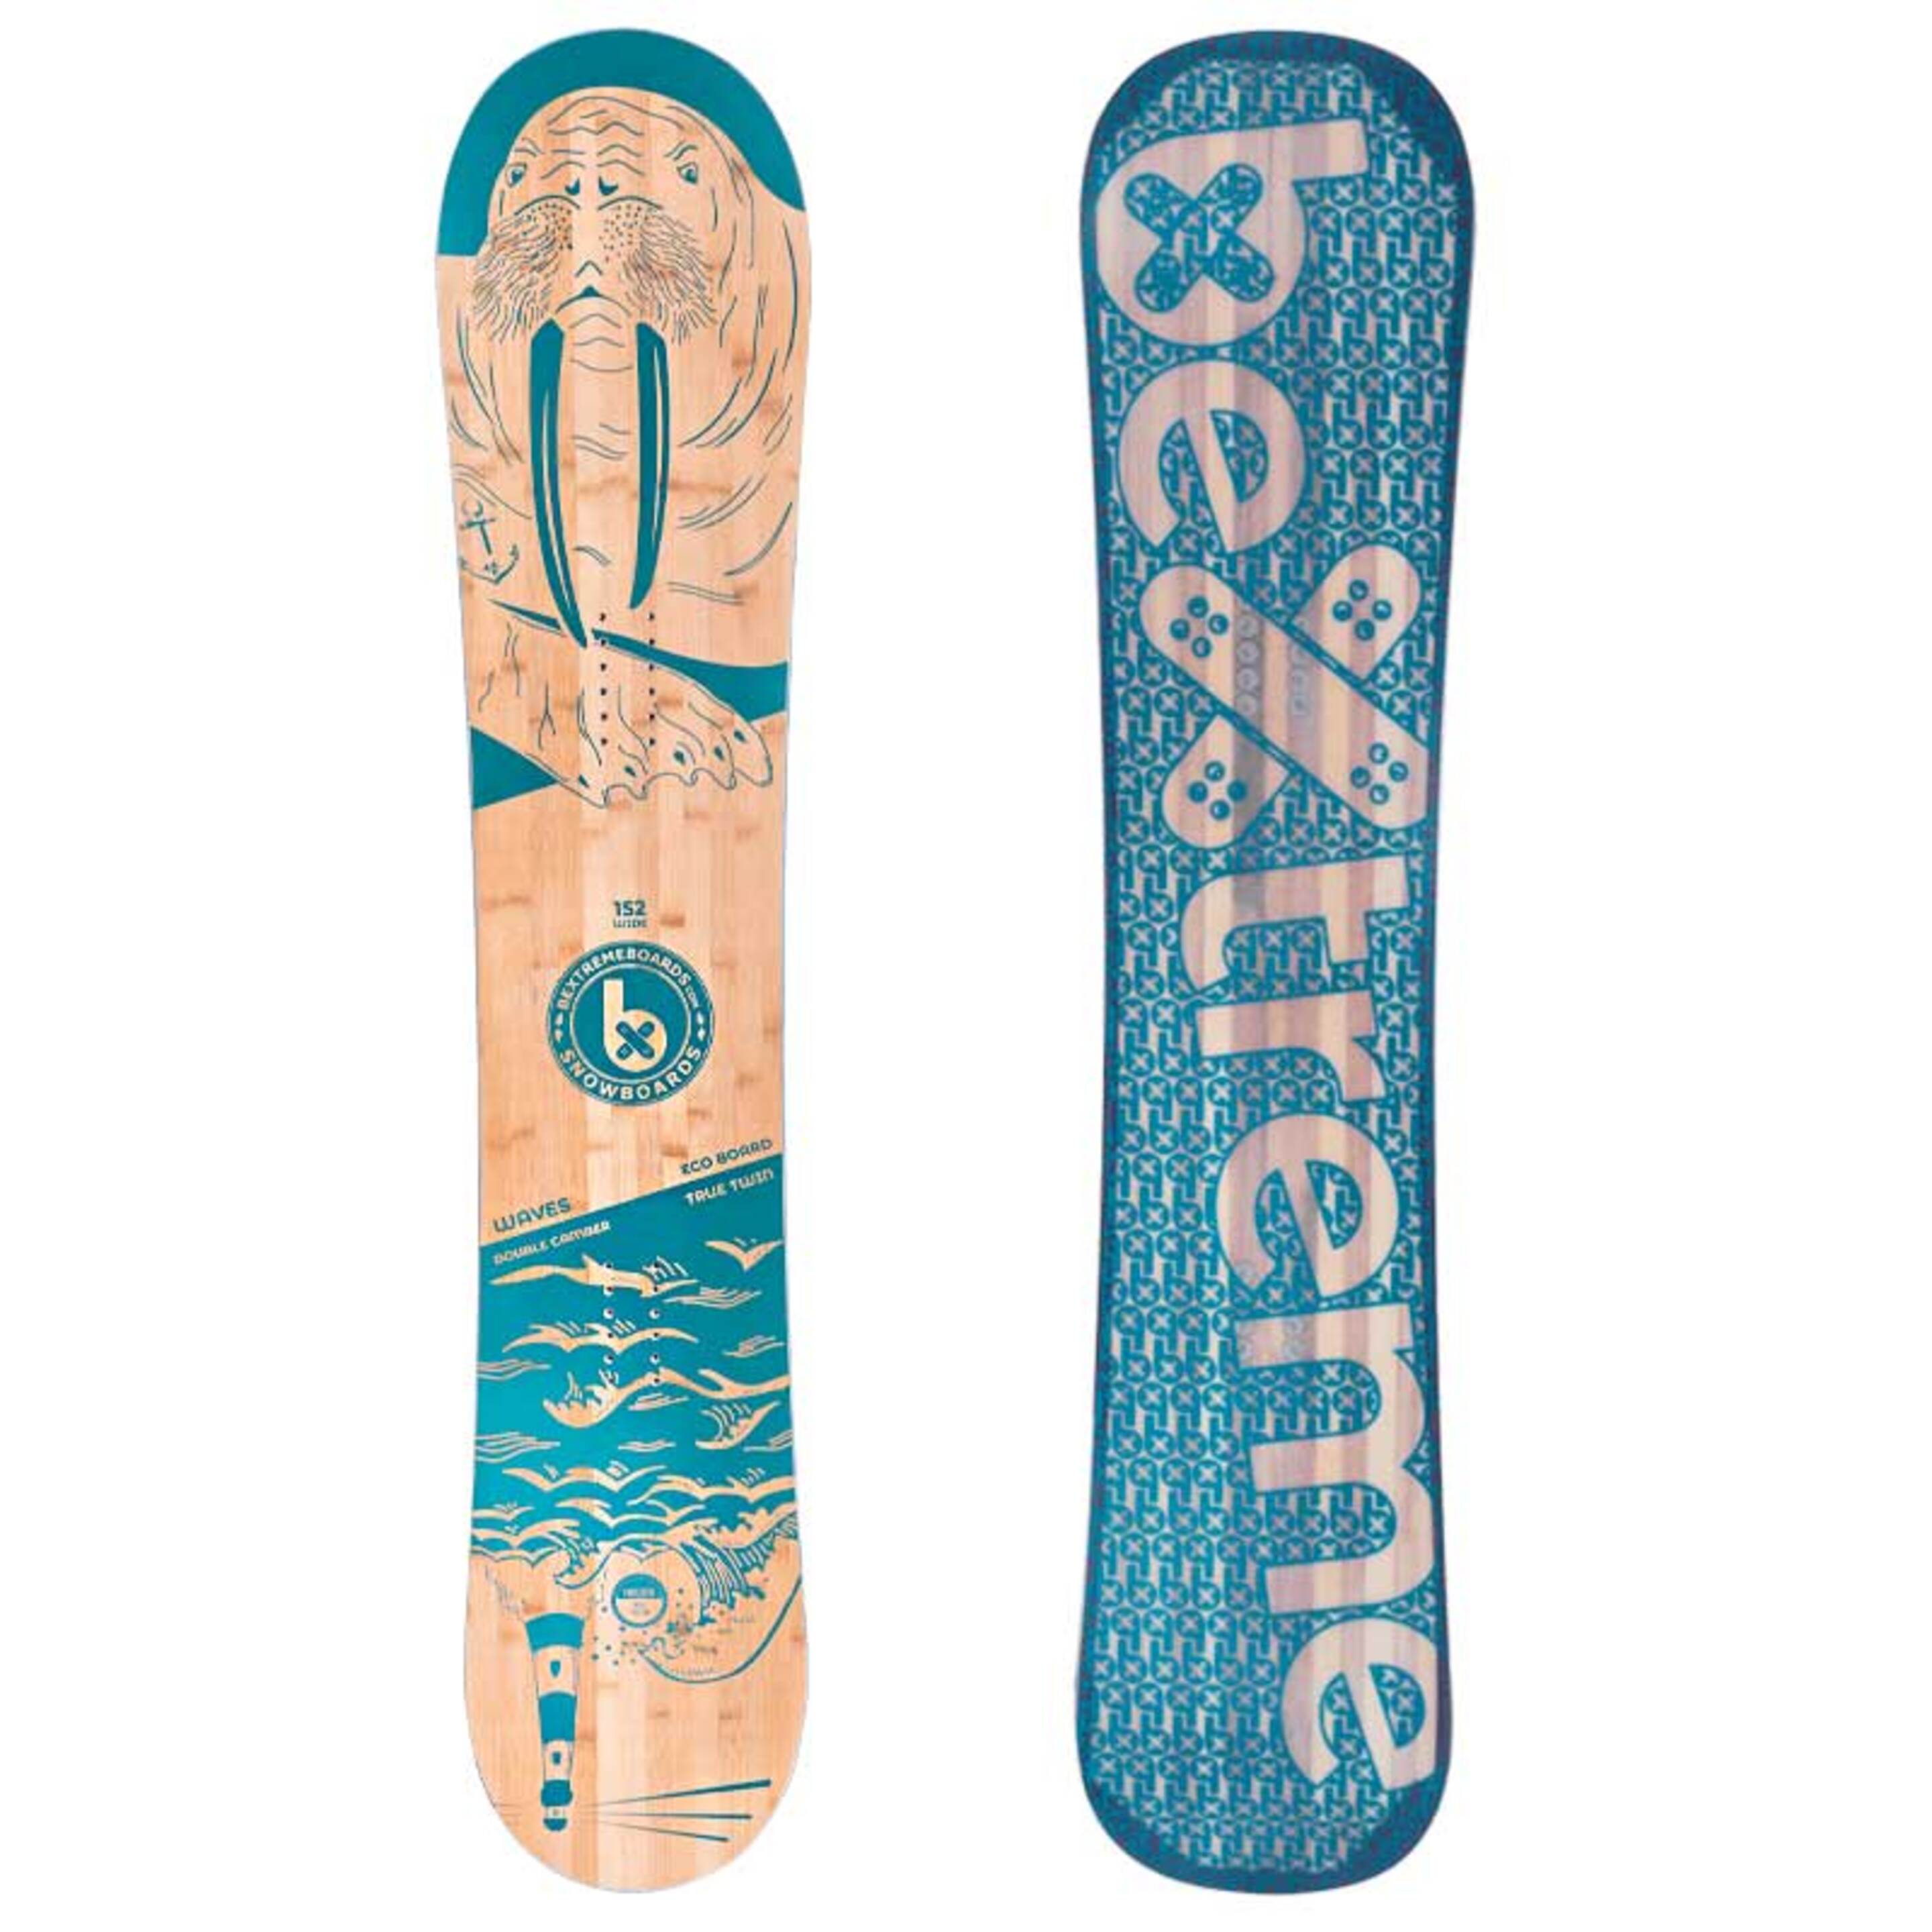 Tabla Snowboard Waves Bextreme 2020 - azul-marron - 